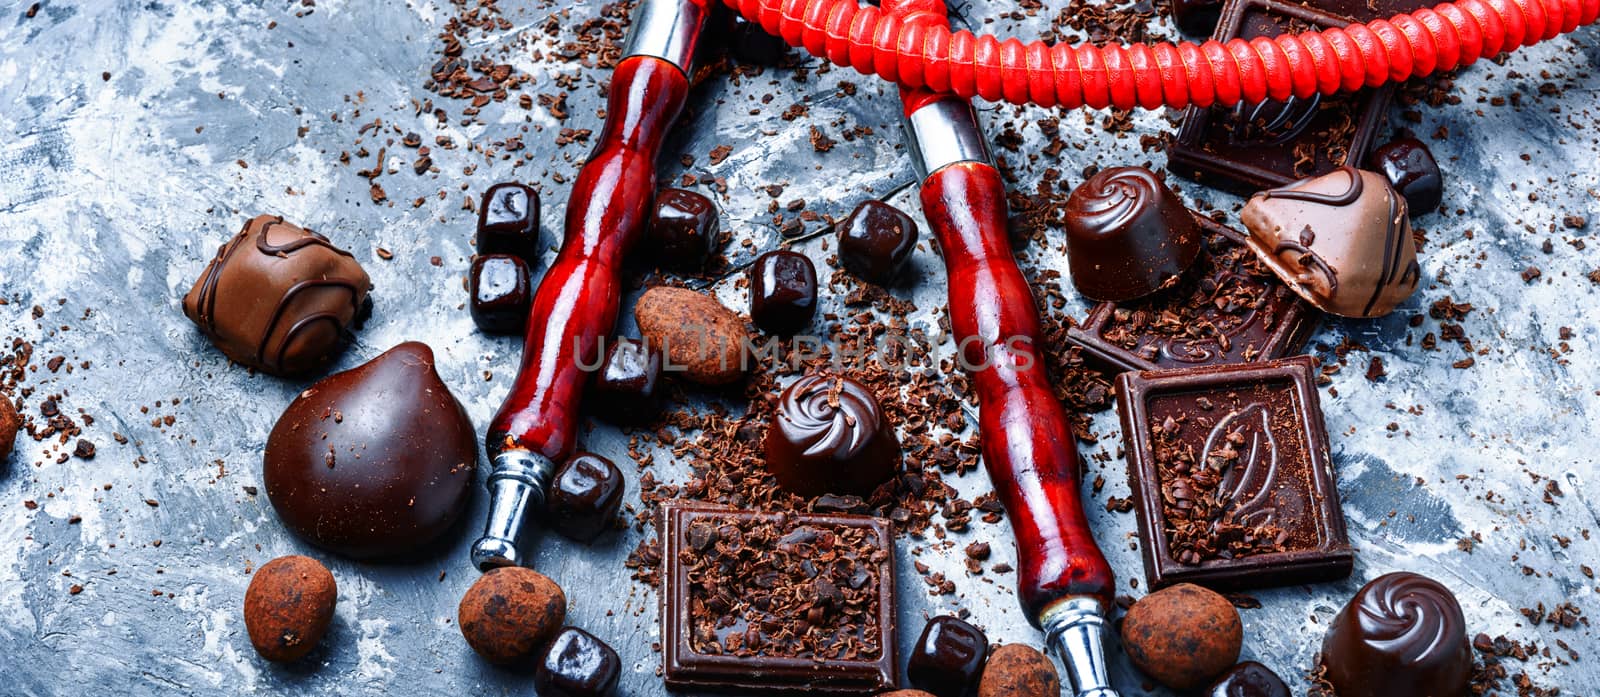 Shisha hookah with chocolate by LMykola